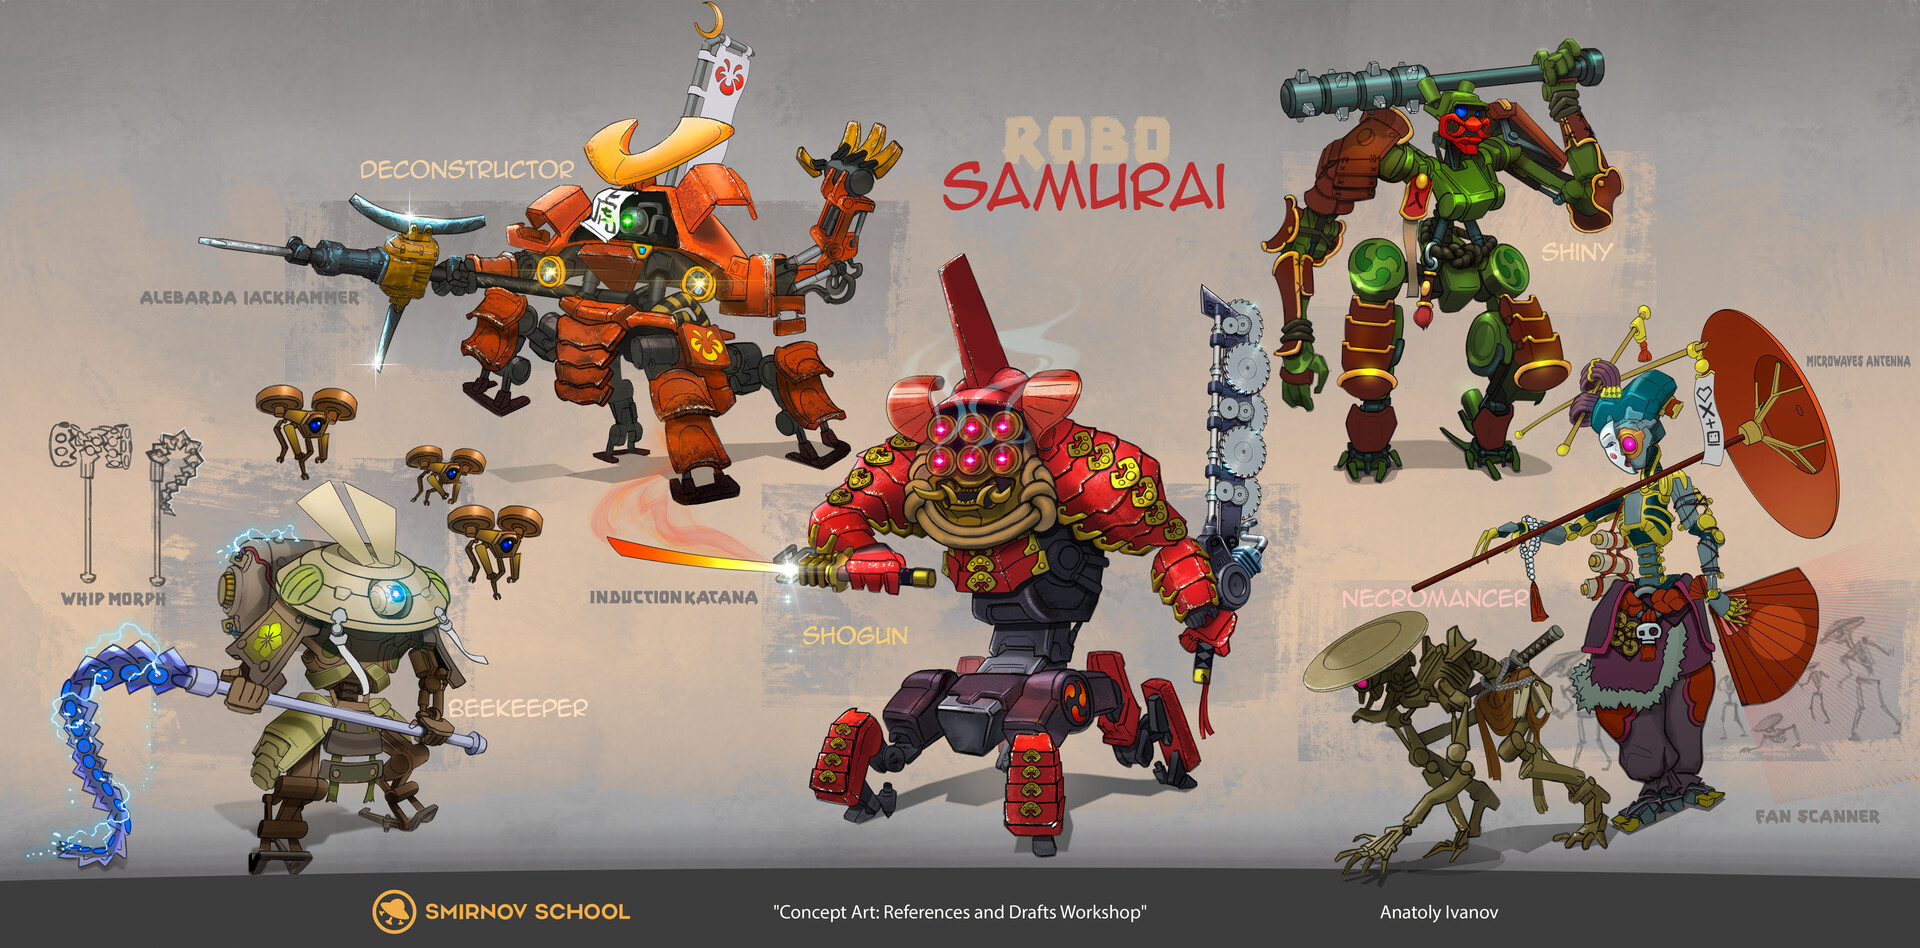 - Samurai Robots "The Skeletons" Fan